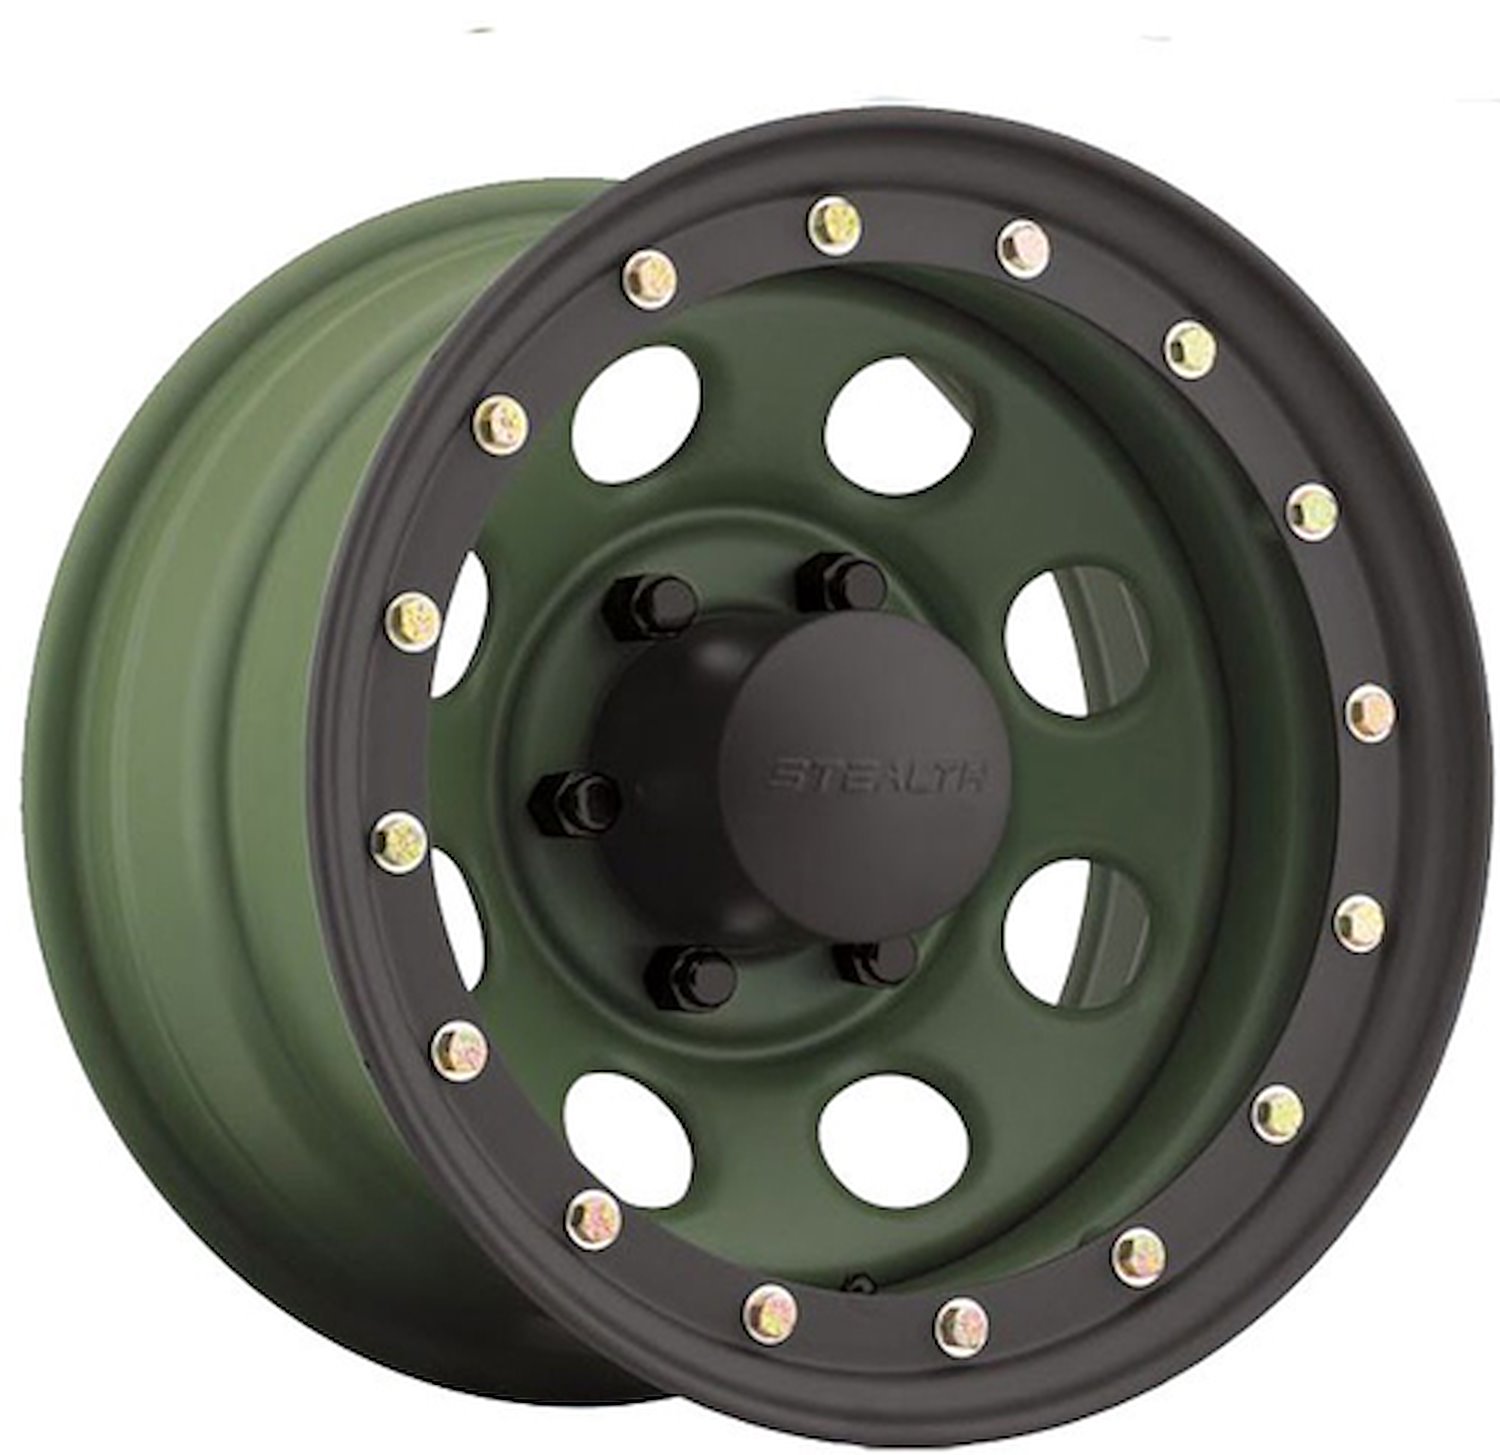 Simulated Beadlock Stealth Camo Green Crawler Wheel (Series 046) Size: 15" x 7"